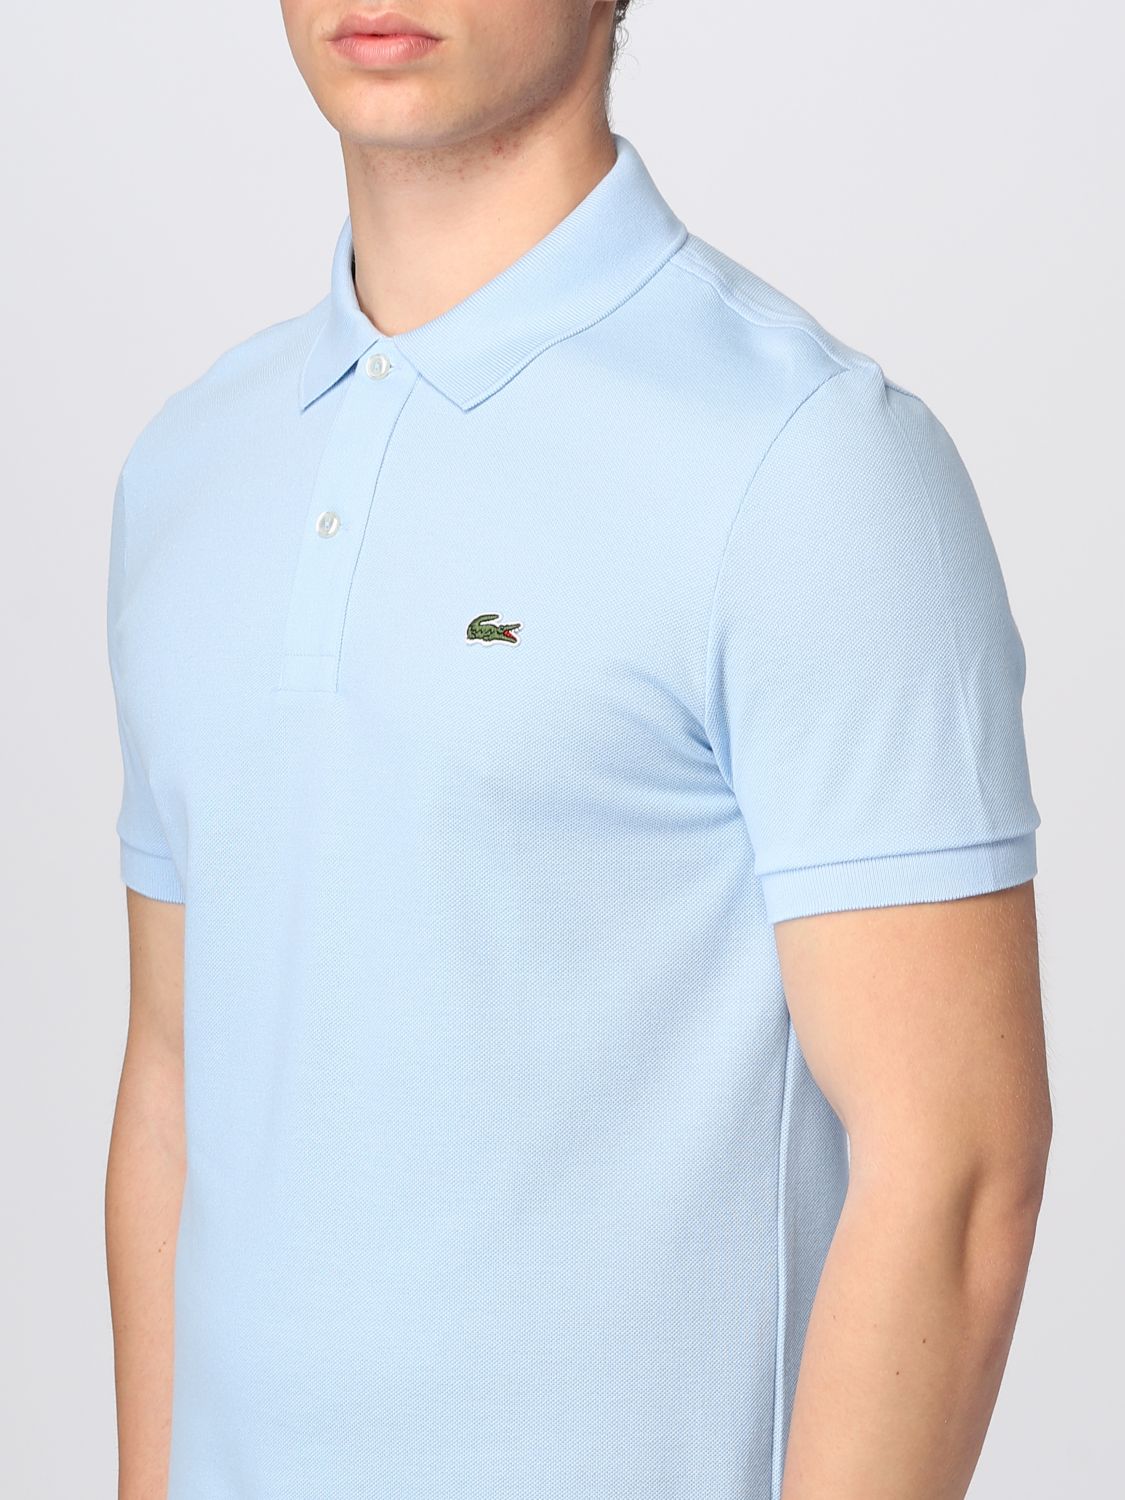 LACOSTE: polo shirt for man - Sky Blue | Lacoste polo shirt PH4012 ...